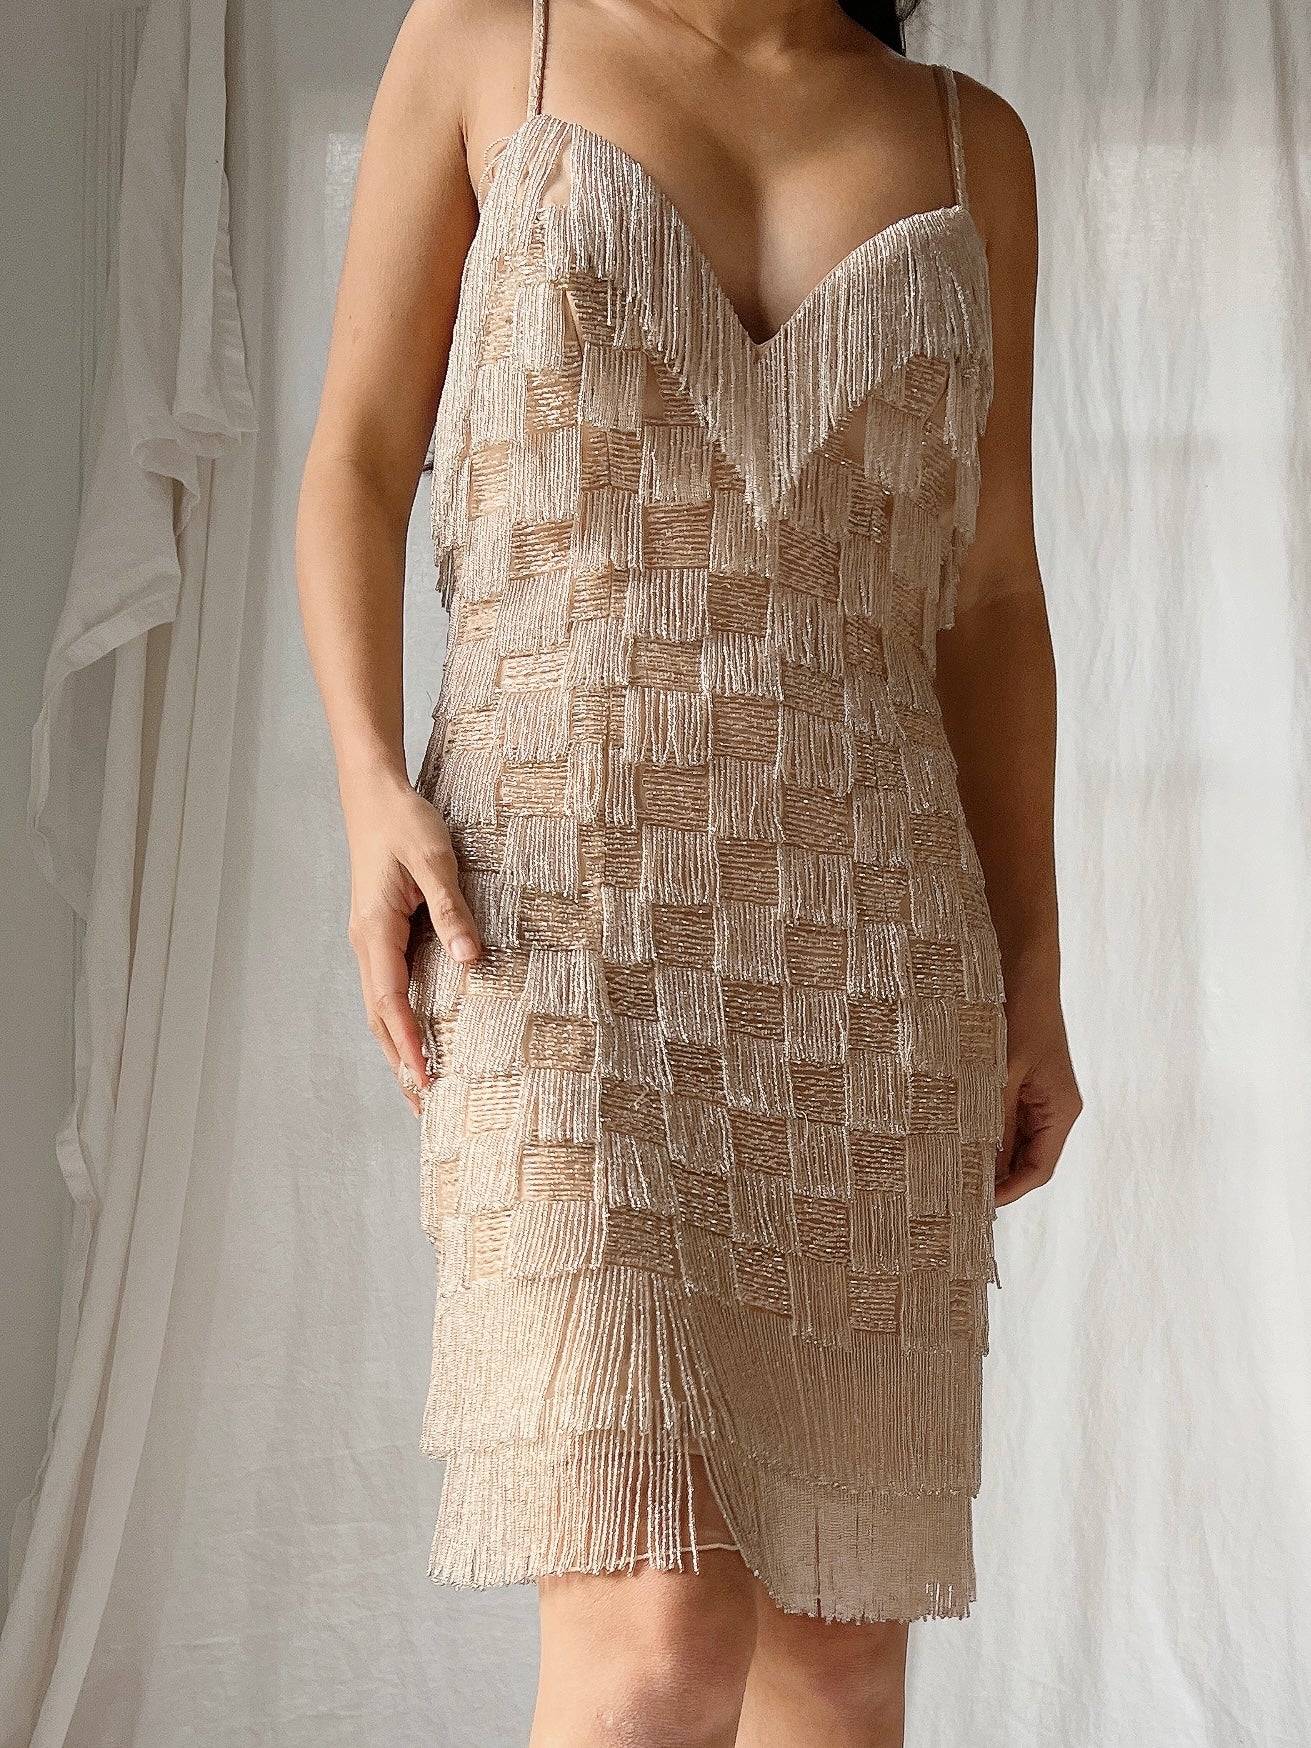 2000s Checkered Beaded Nude Dress - S/4